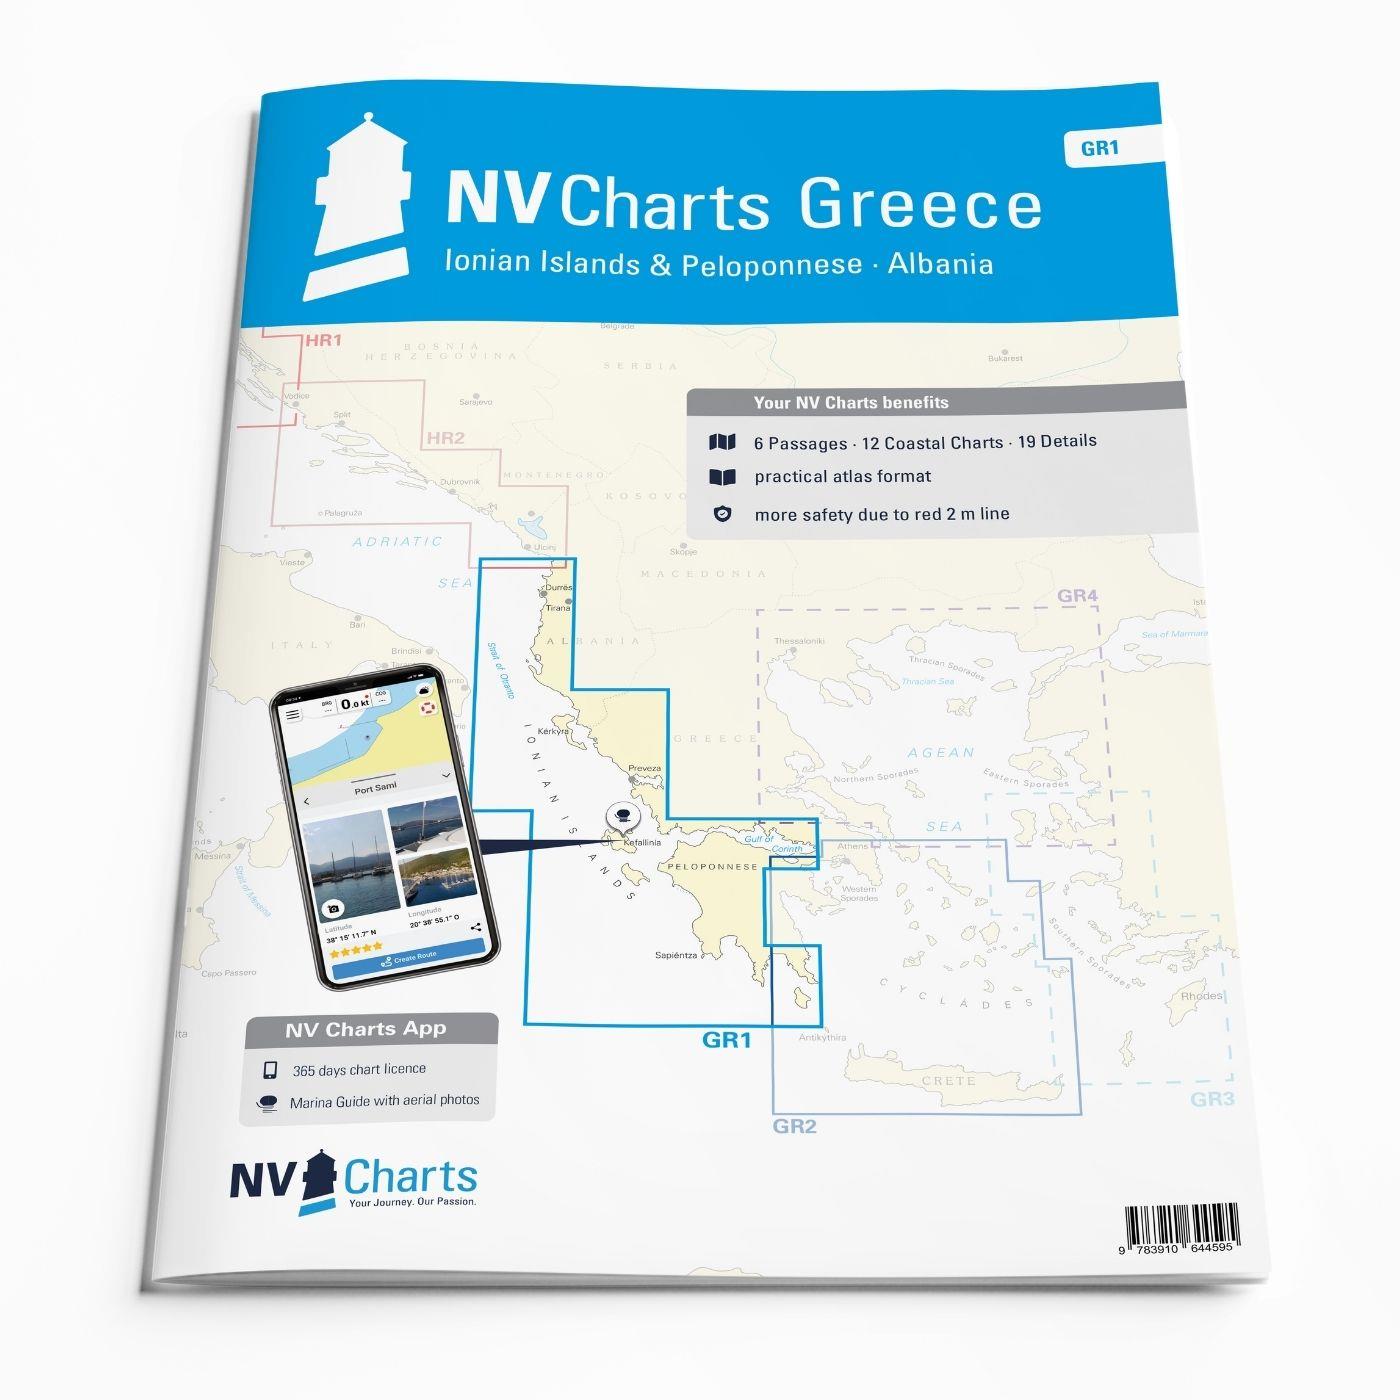 NV Charts Greece GR1 - Ionian Islands & Peloponnese to  Albania